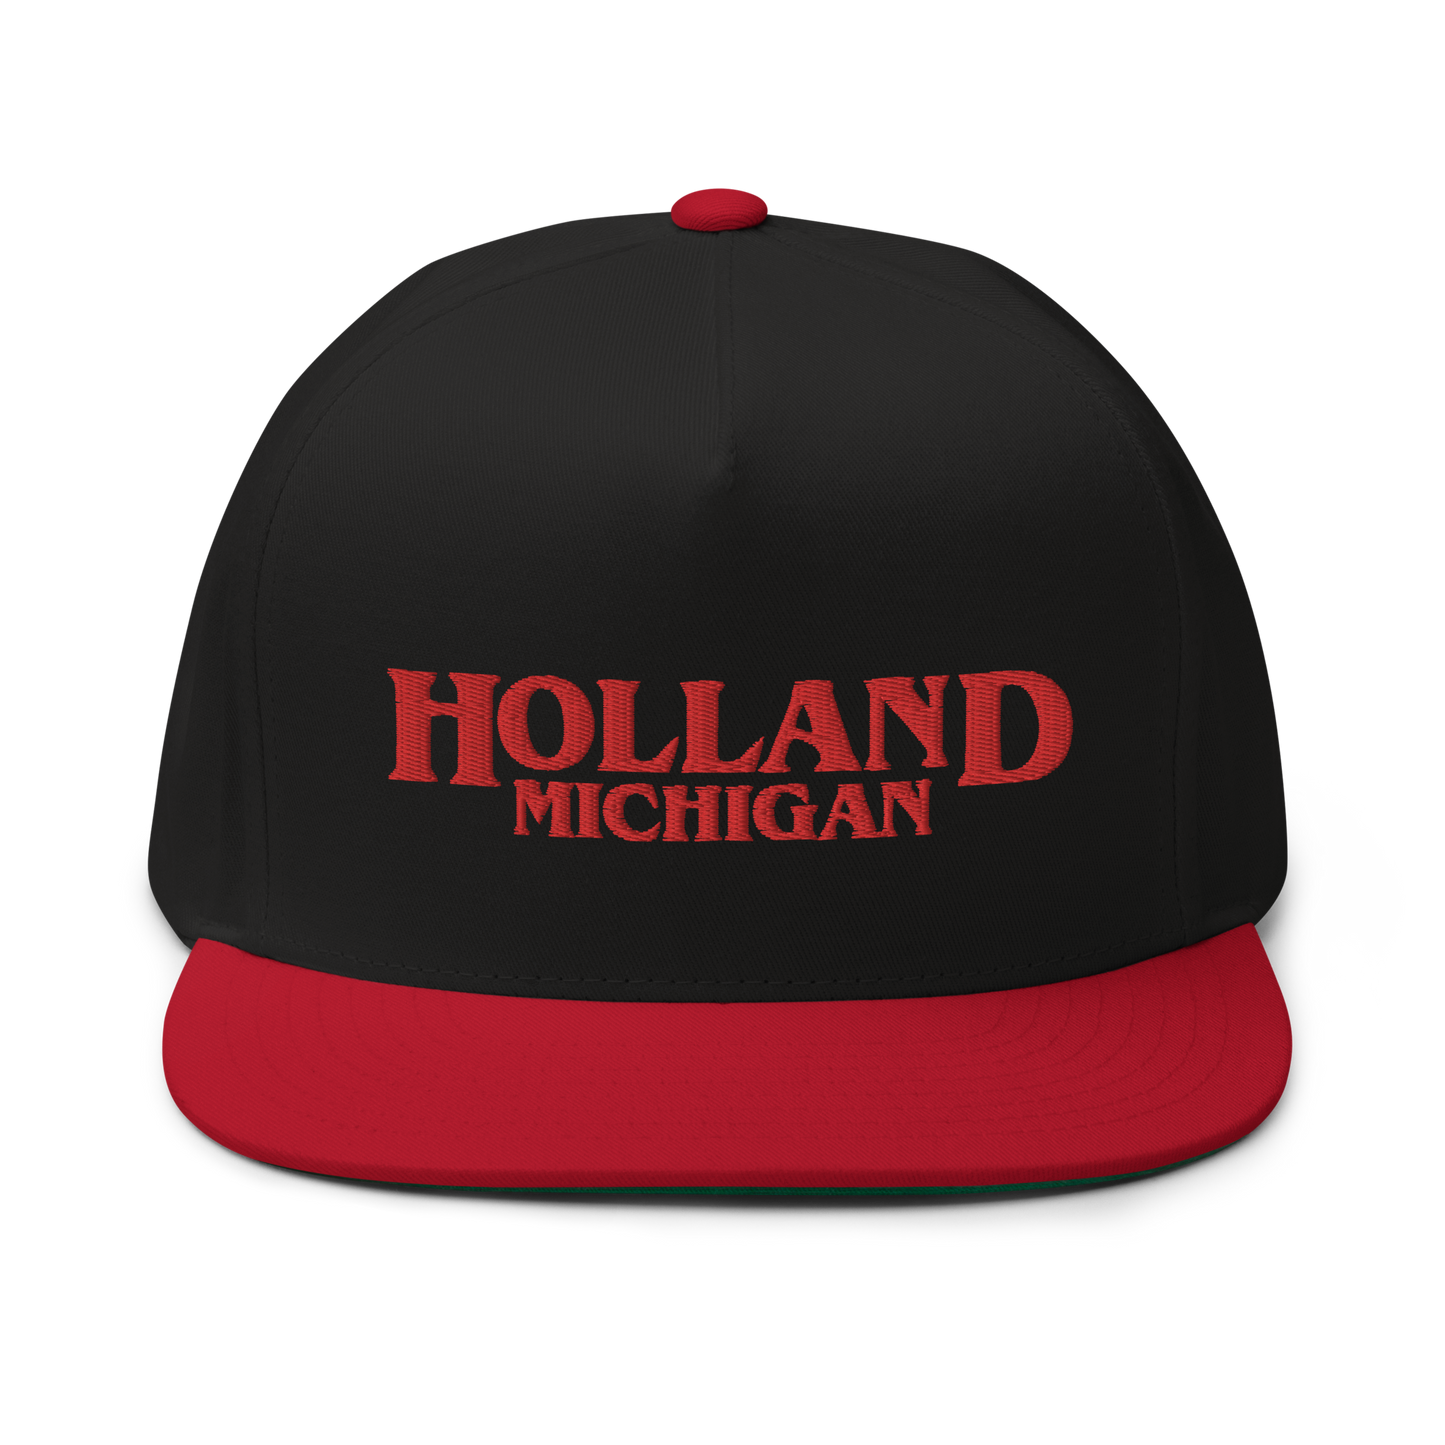 'Holland Michigan' Flat Bill Snapback (1980s Drama Parody)